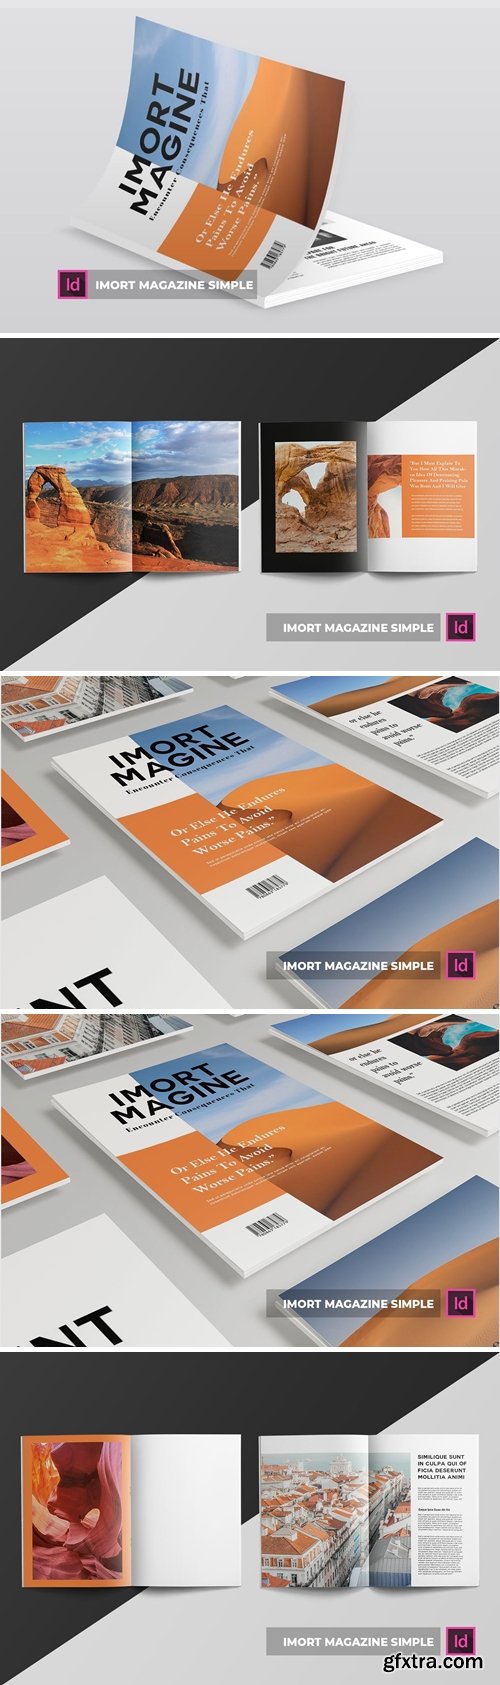 Imort magazine simple | Magazine Template